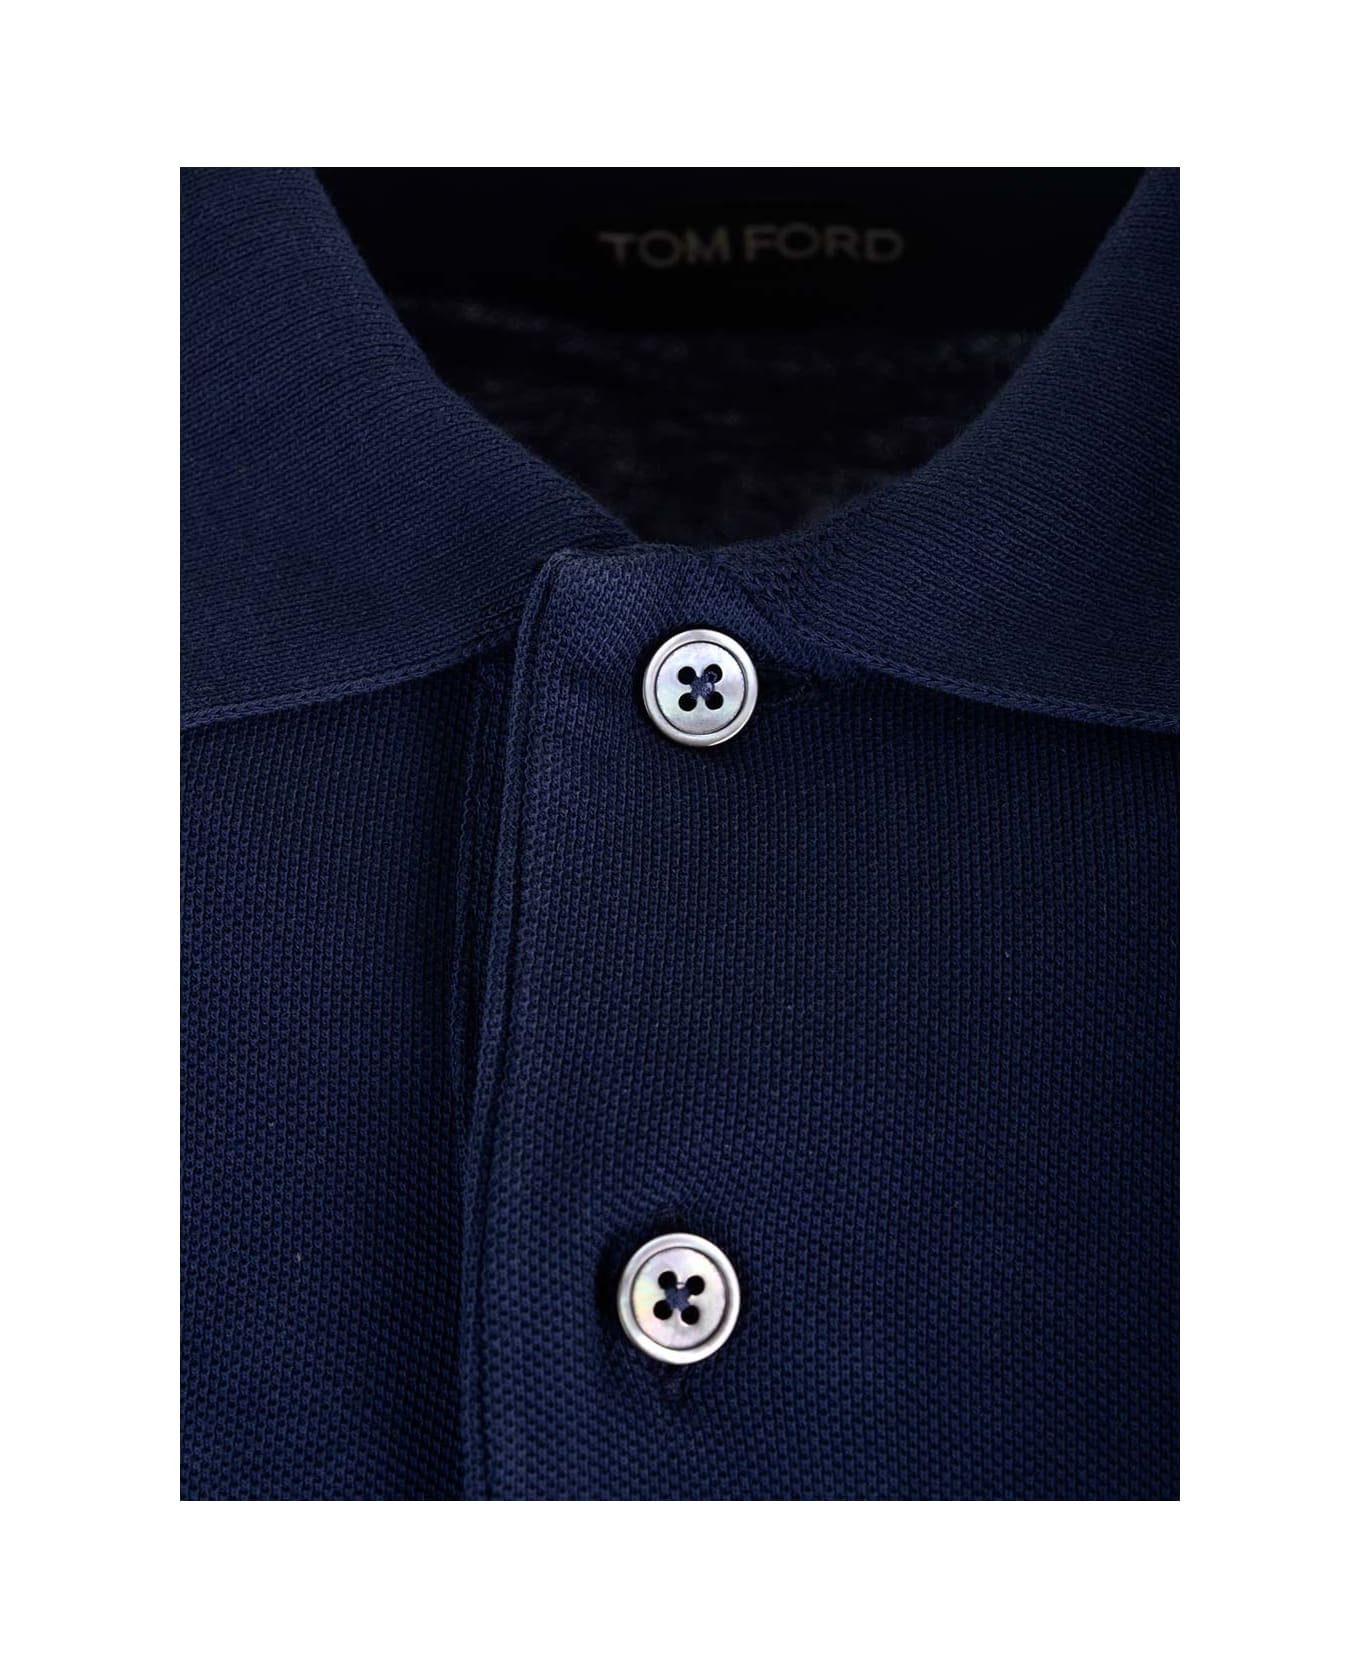 Tom Ford Navy Blue Cotton Polo Shirt - BLUE